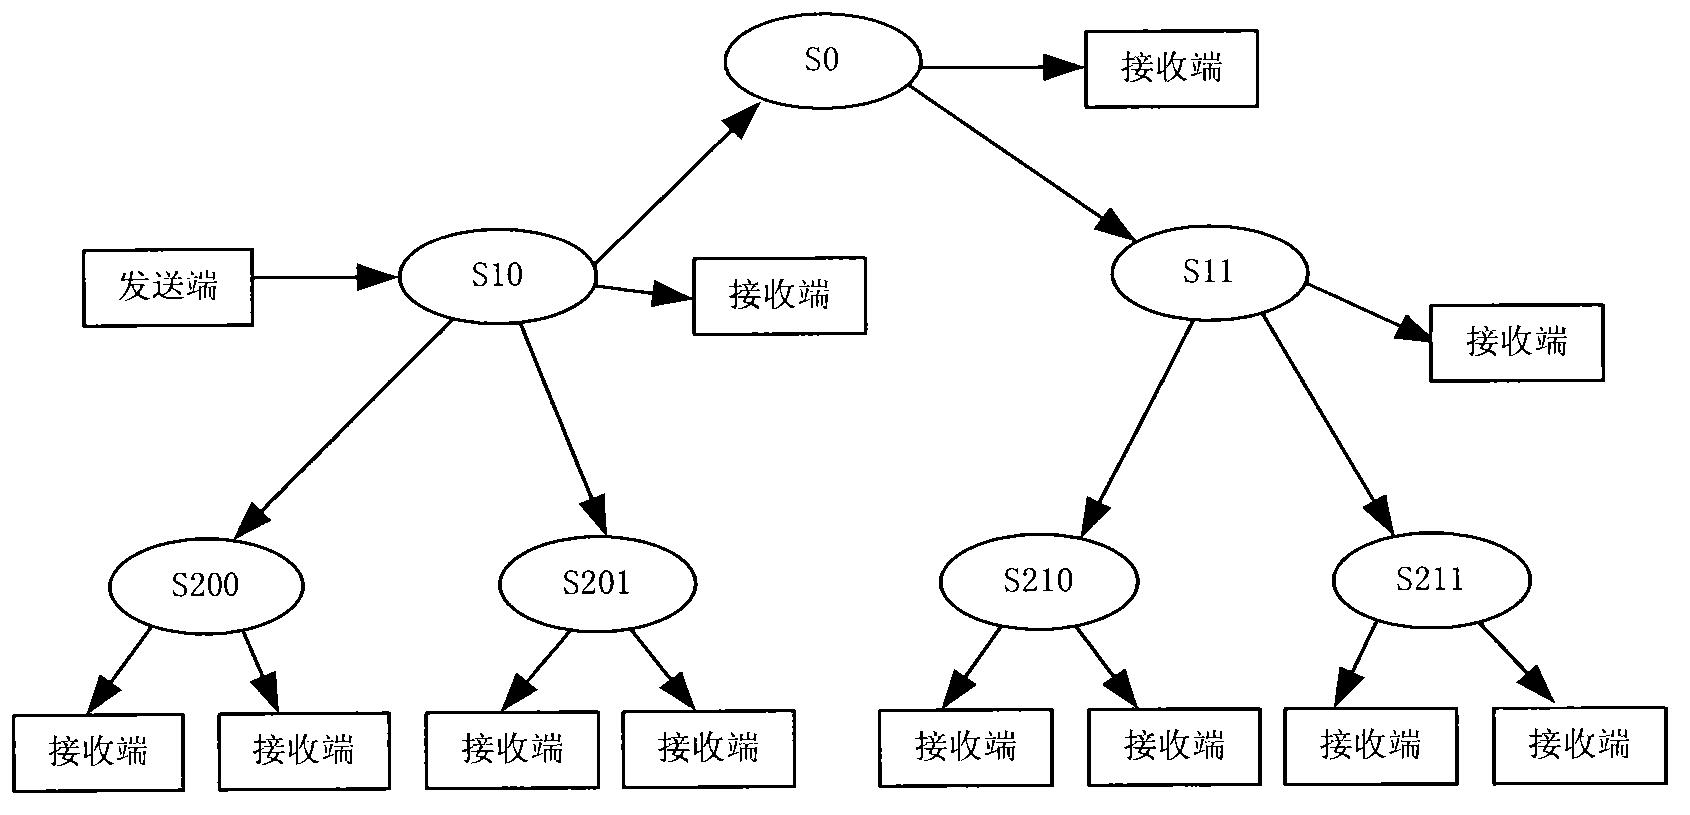 Tree network-based multistage server networking communication method